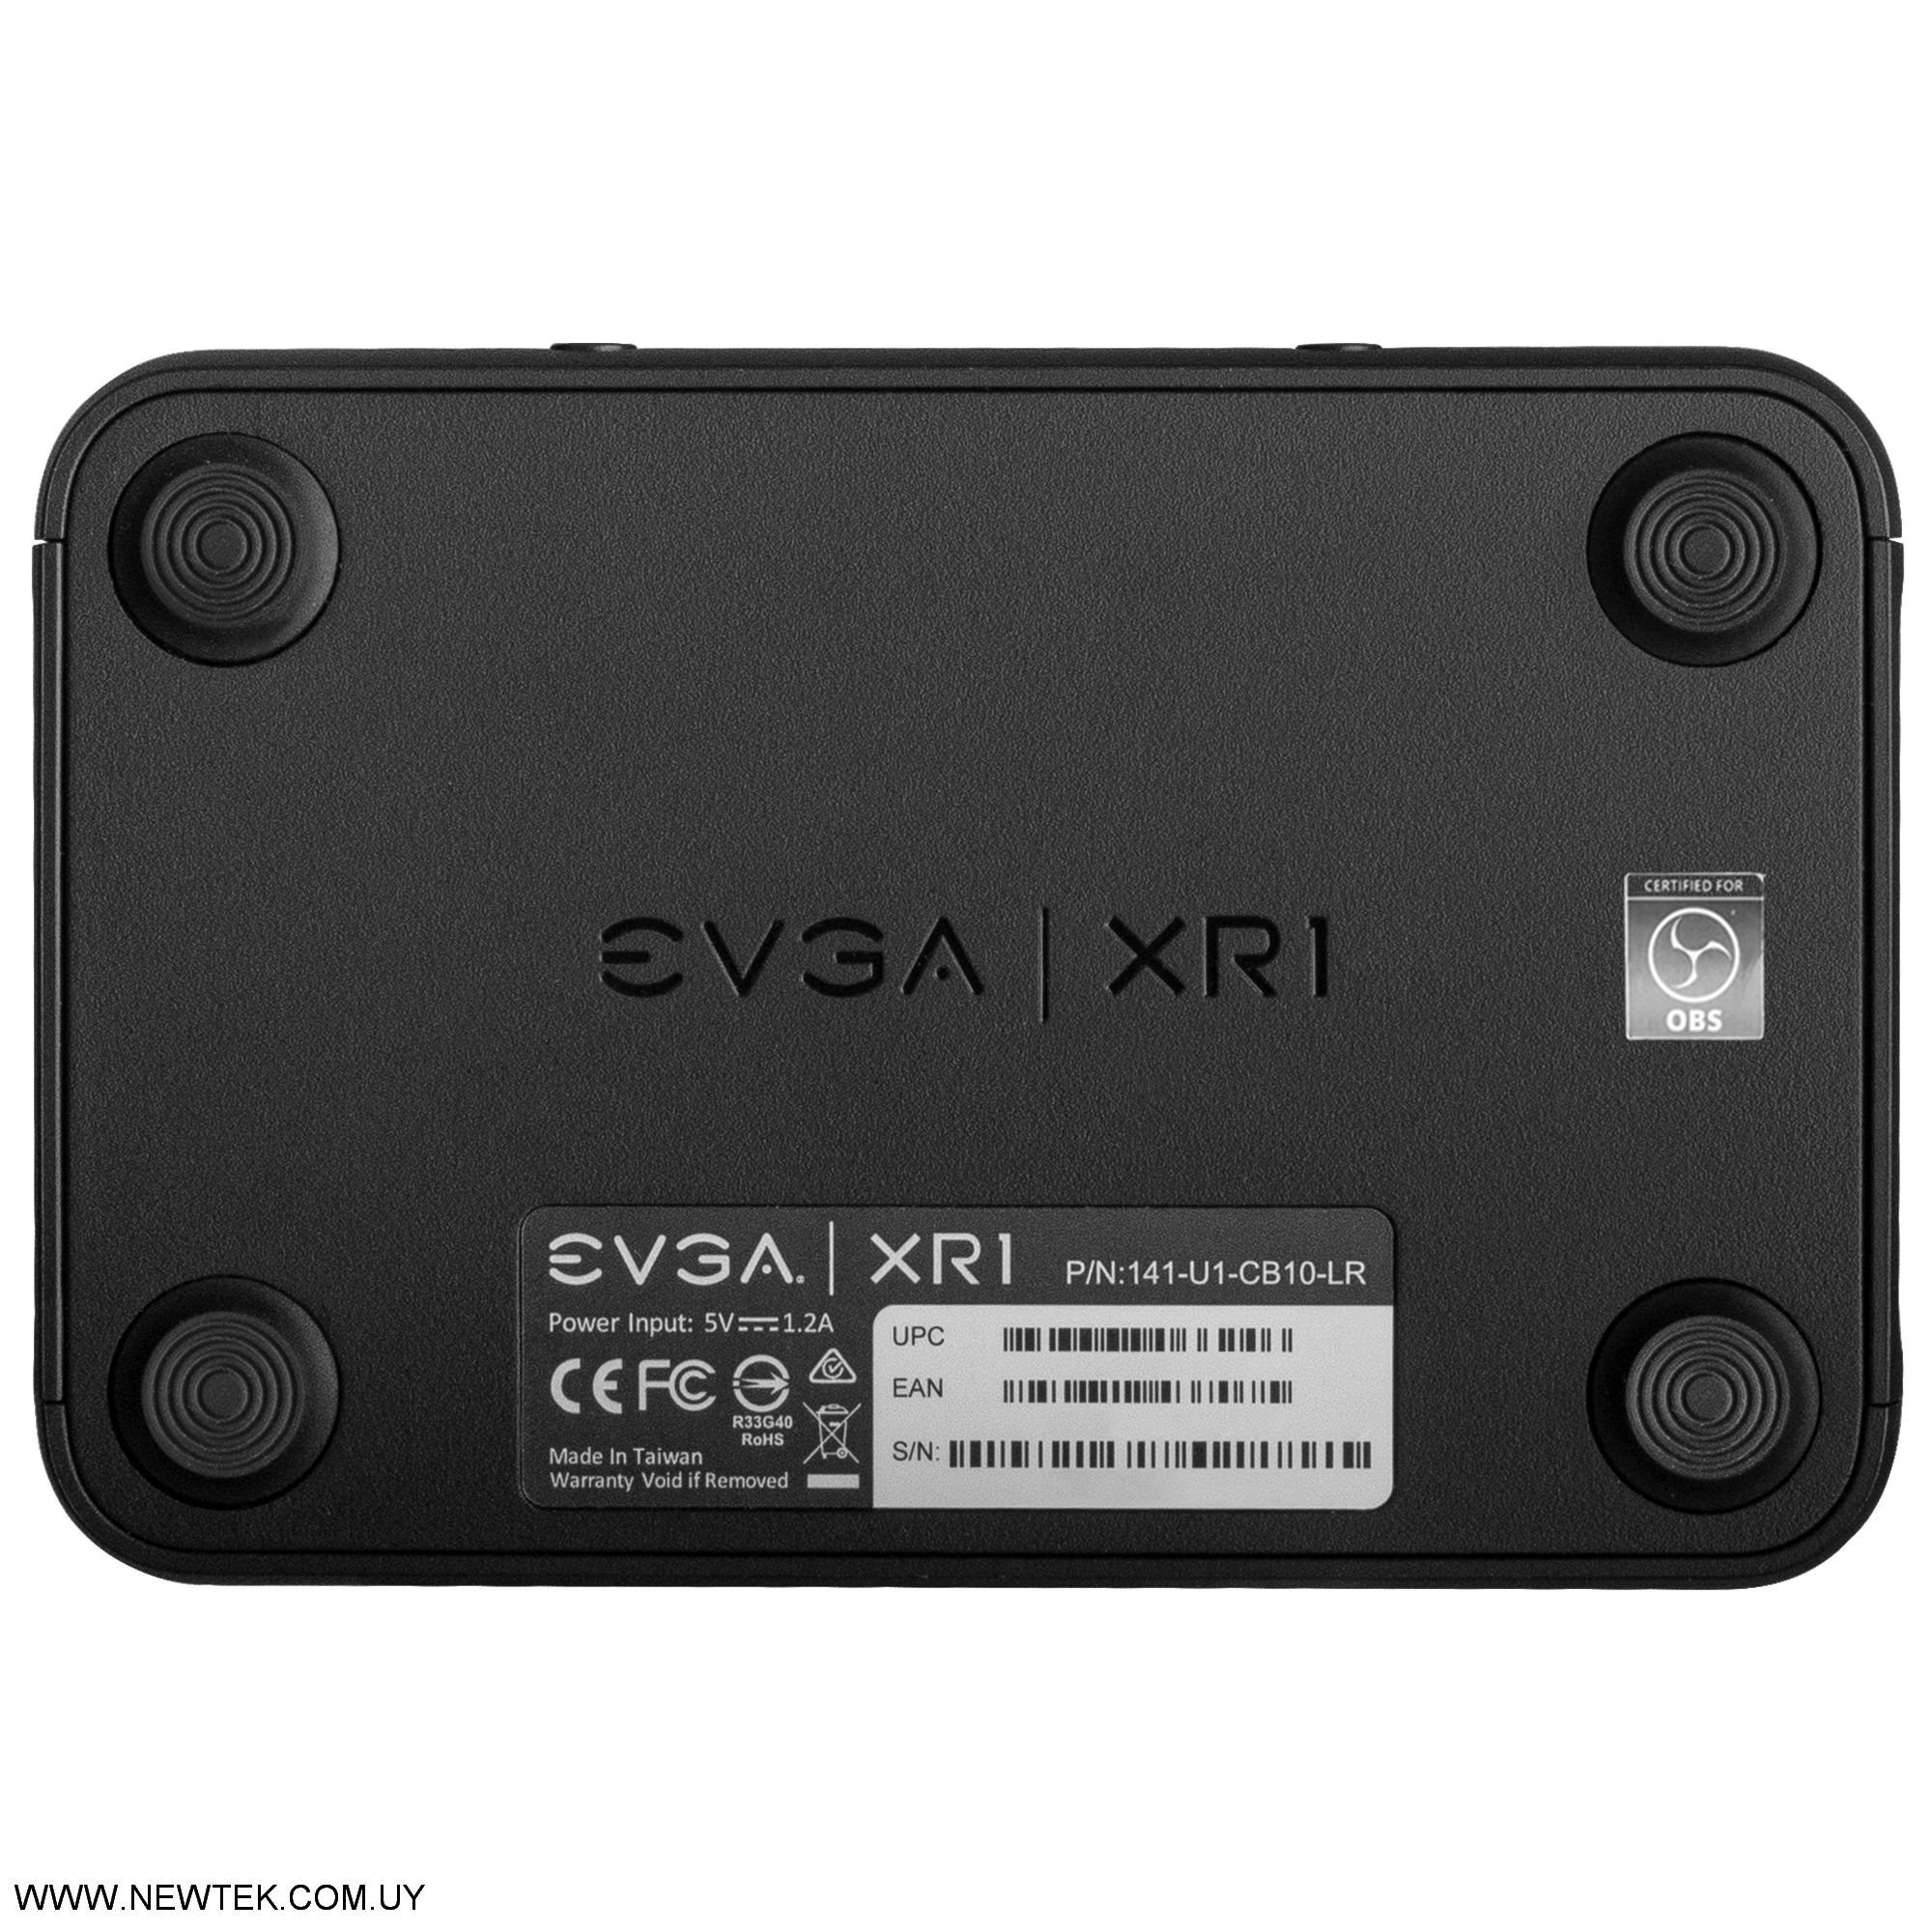 Capturadora de Video EVGA XR1 Interface 4k 120Hz Certificado OBS Streamers ARGB